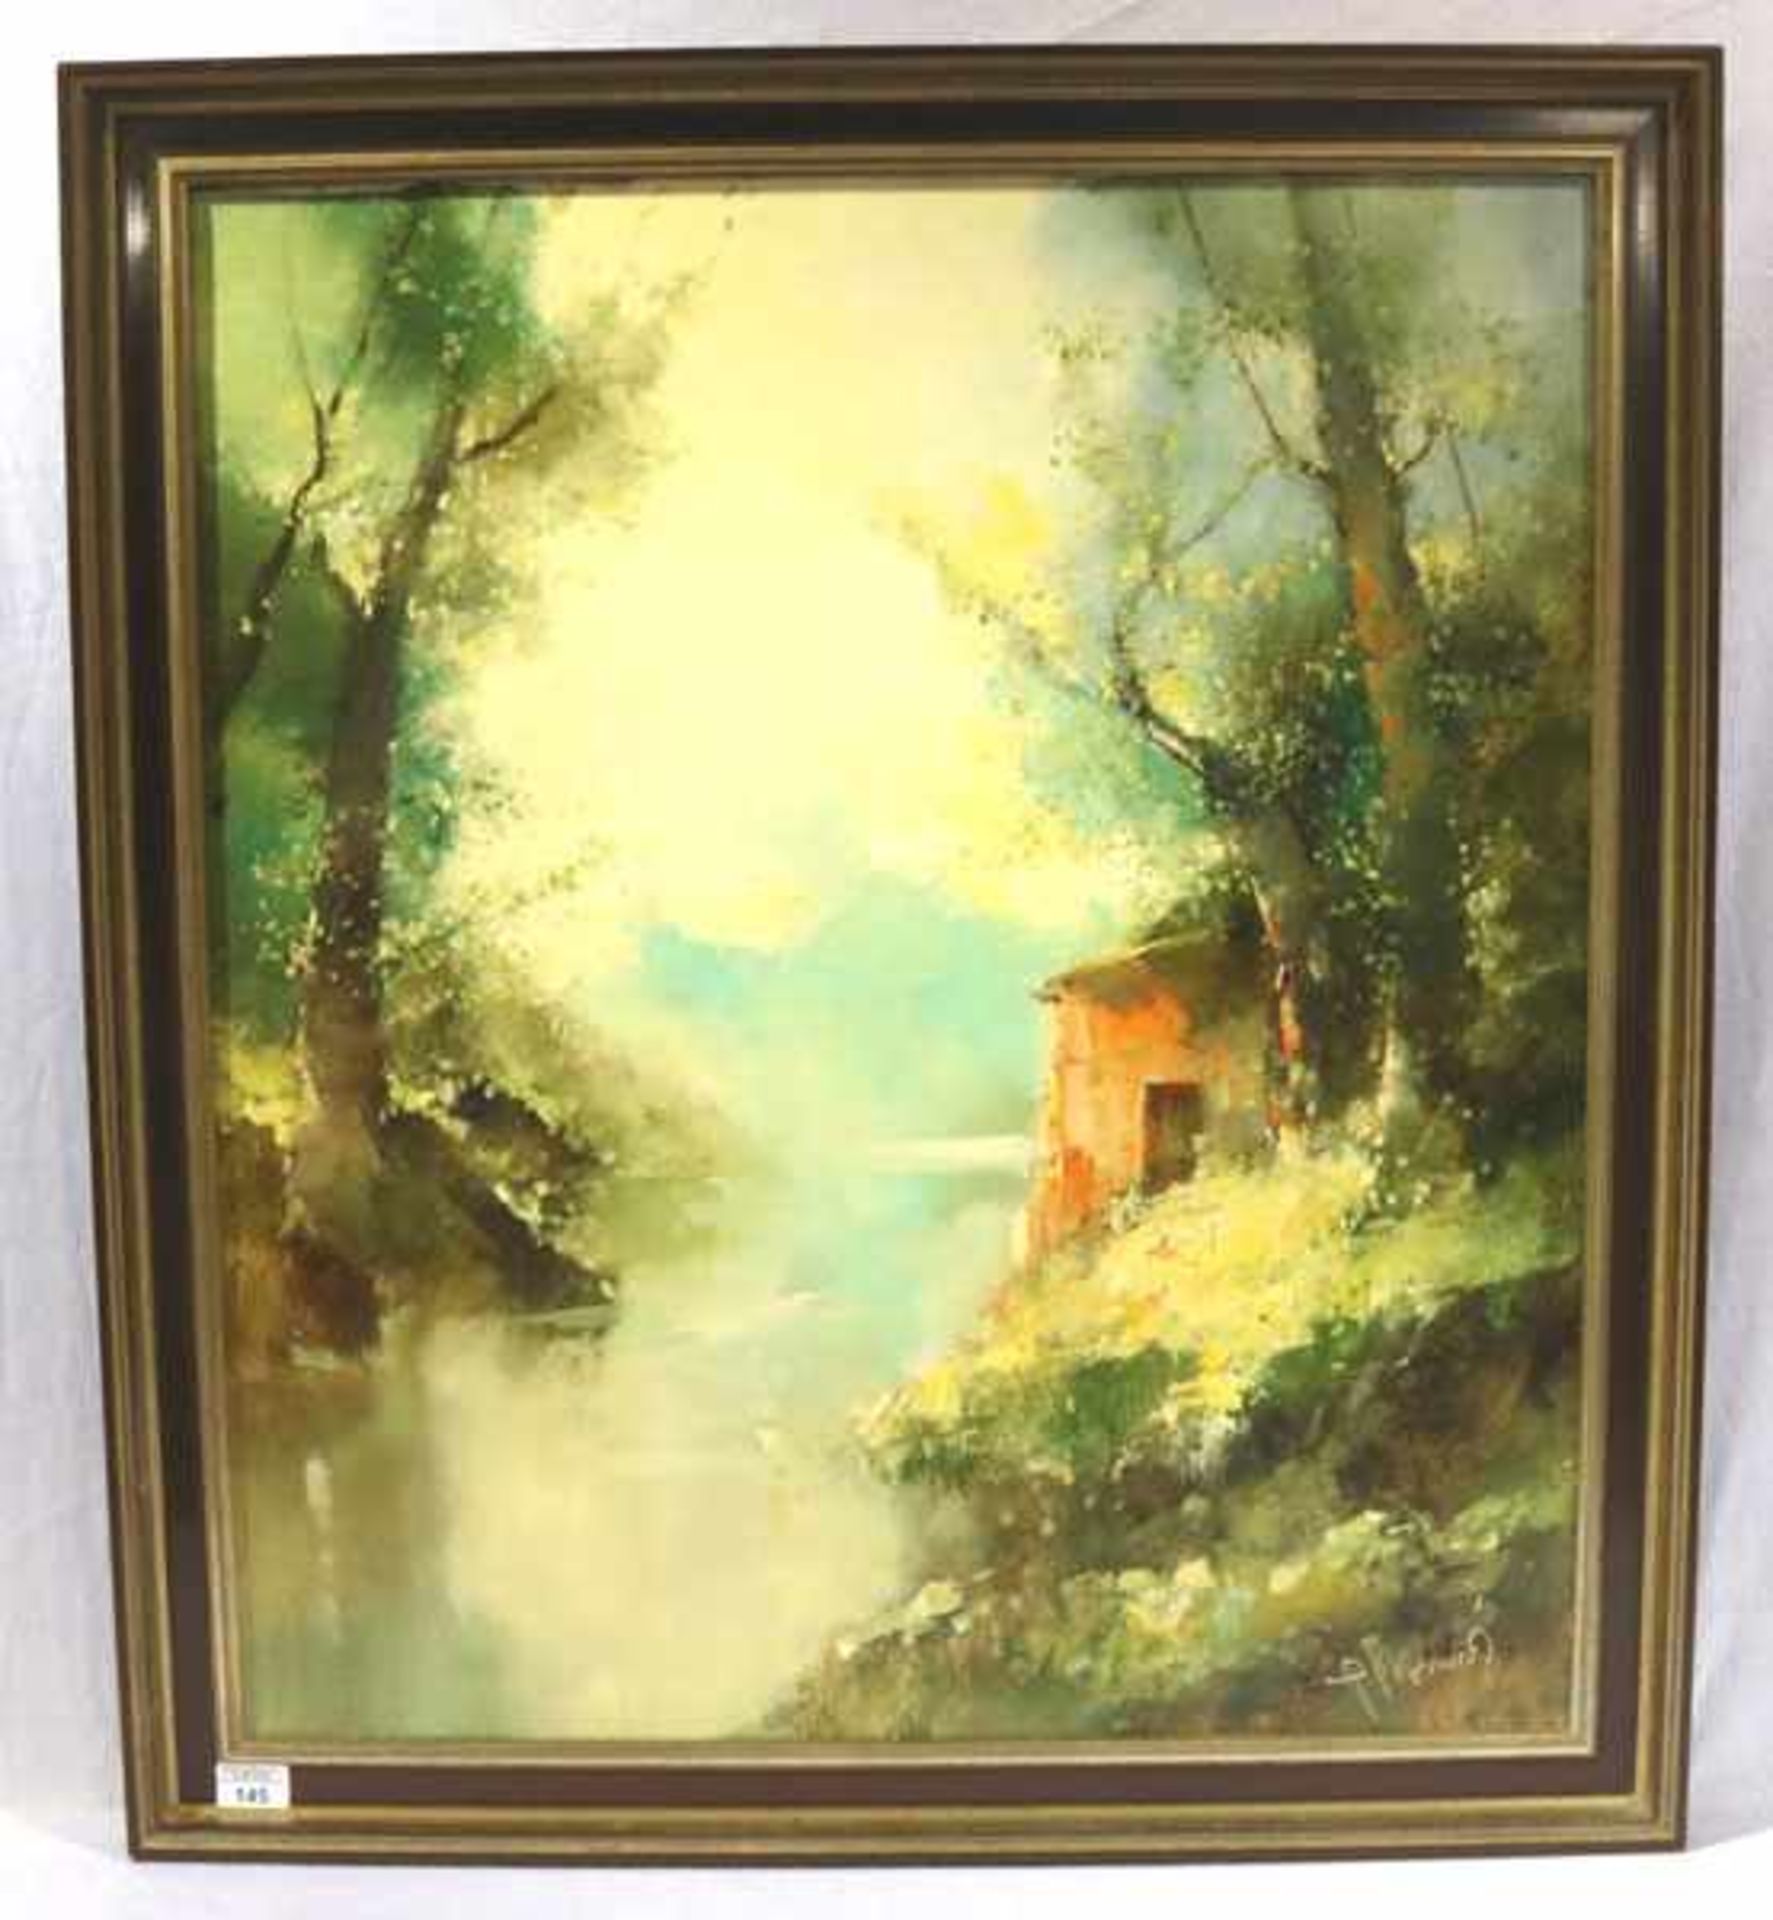 Gemälde ÖL/LW 'Landschafts-Szenerie mit Haus am See', signiert P. Morrò, (Ingfried Henze) + 1925